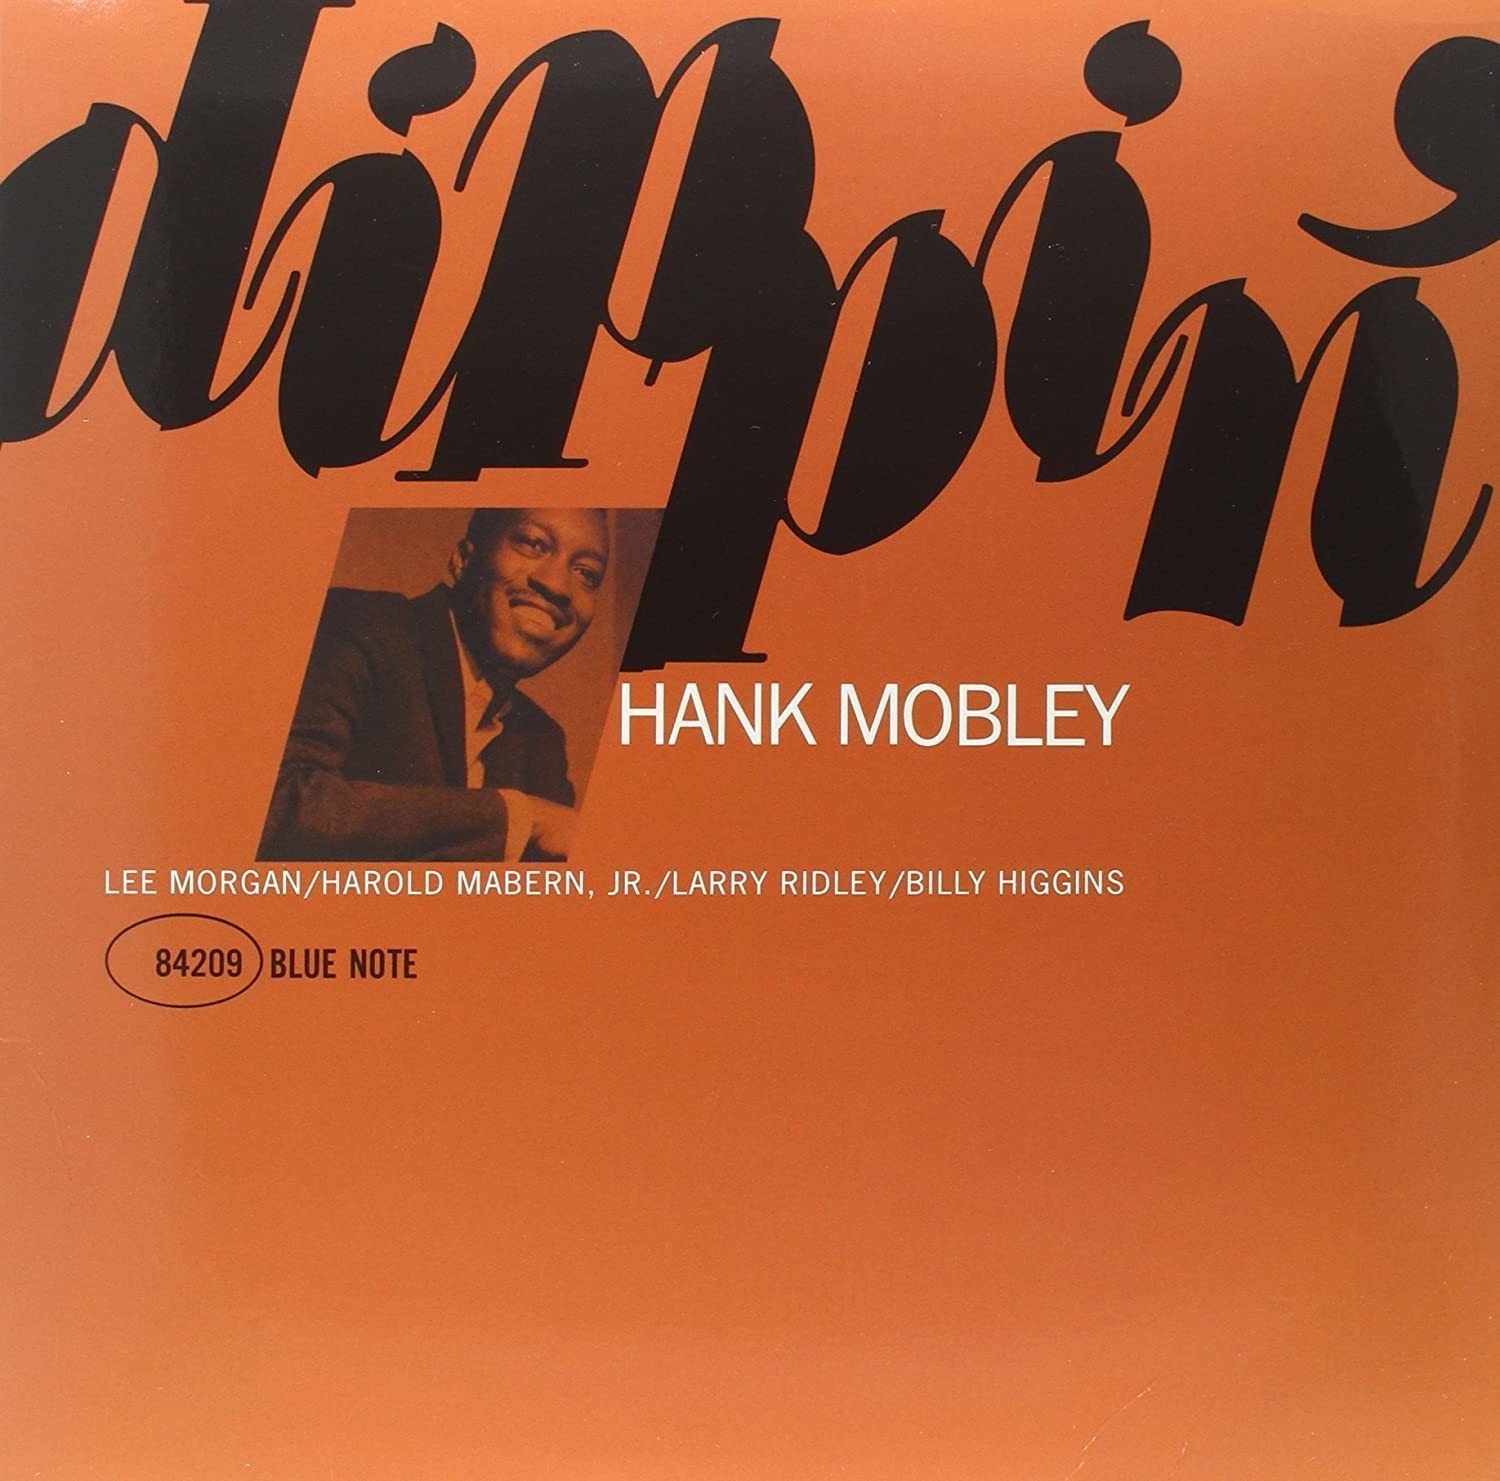 Vinyl Record Hank Mobley - Dippin' (2 LP)